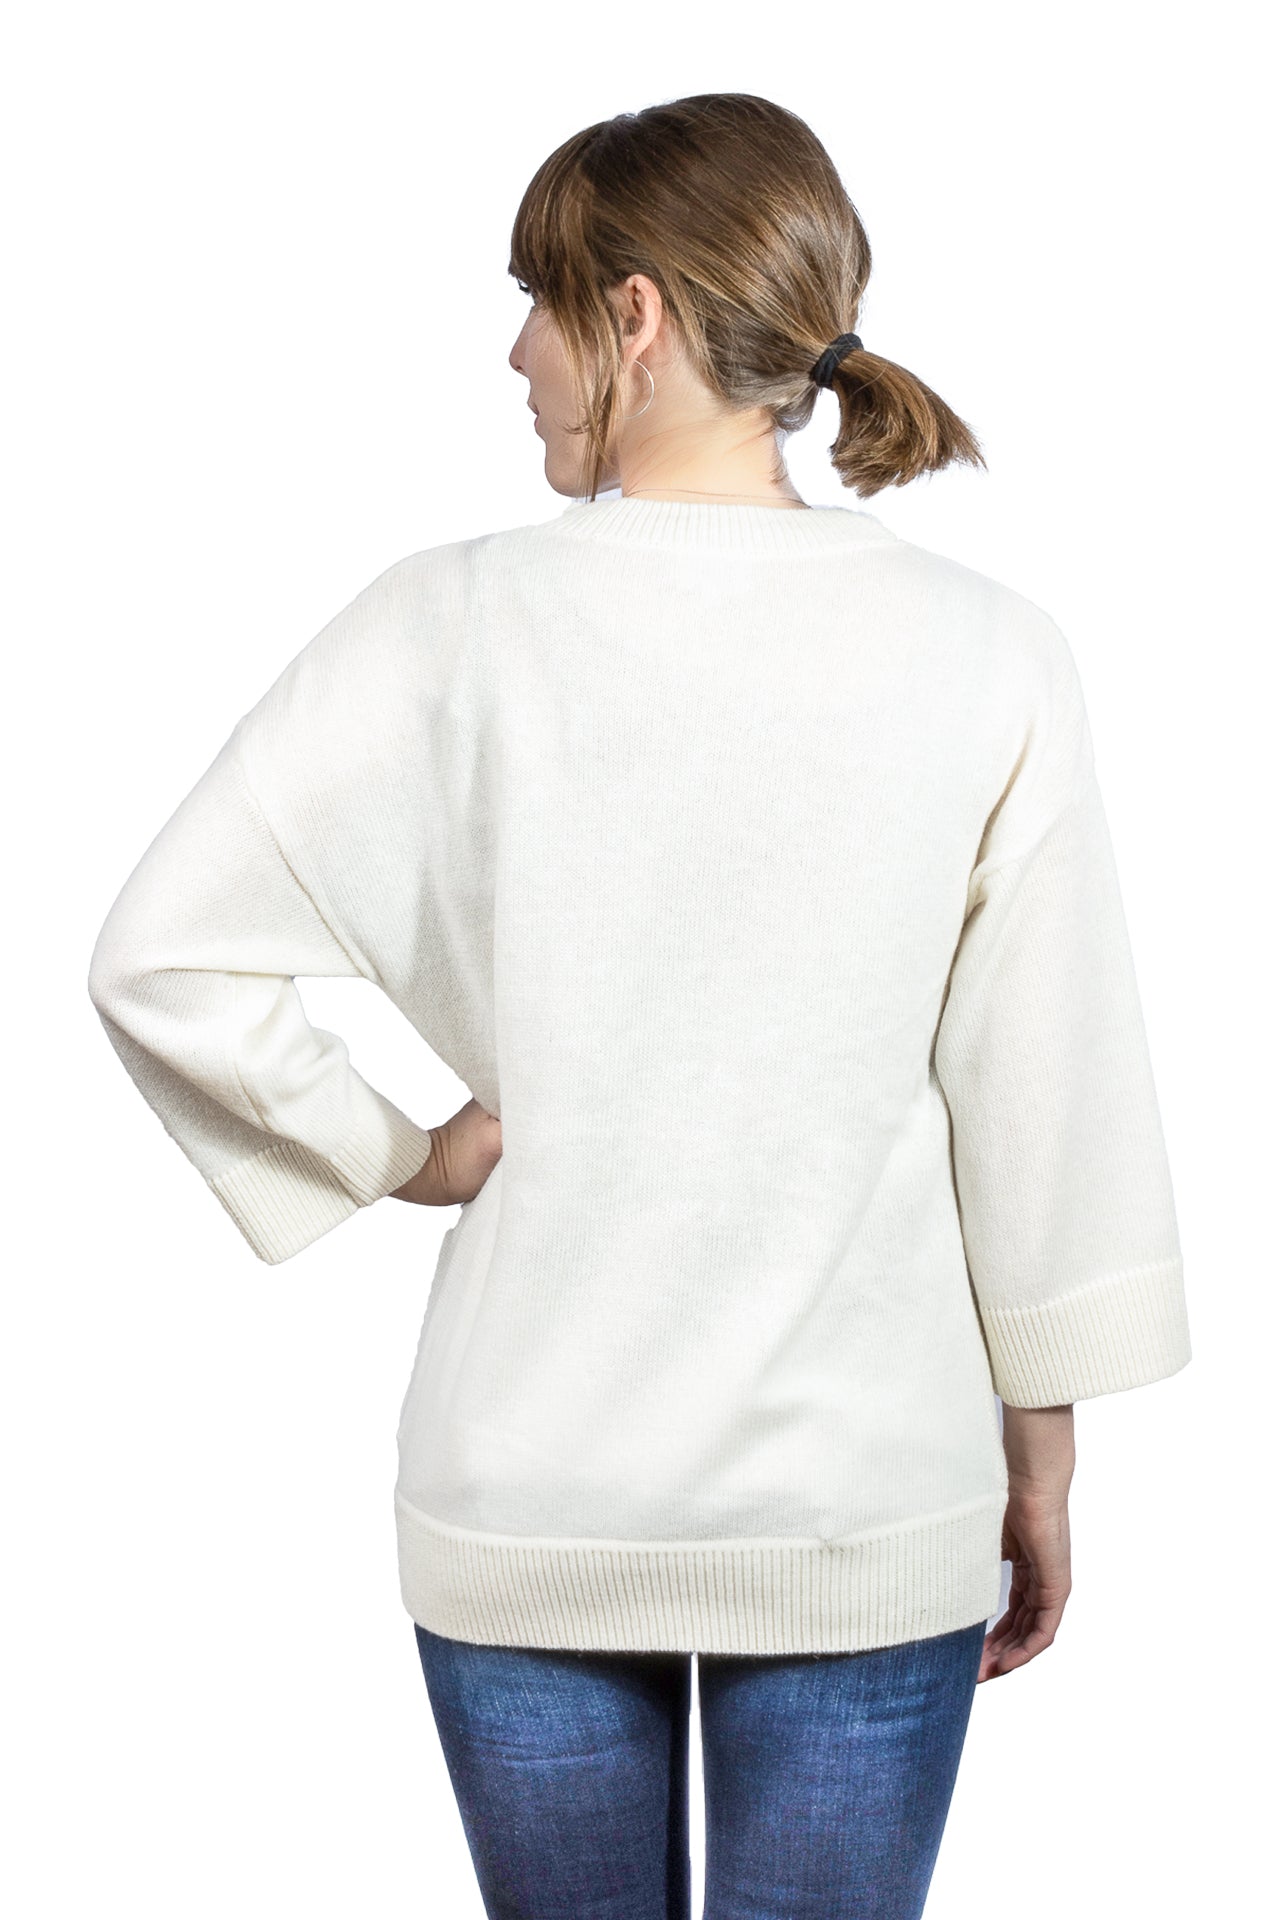 Charli Lanie Sweater (Final Sale)